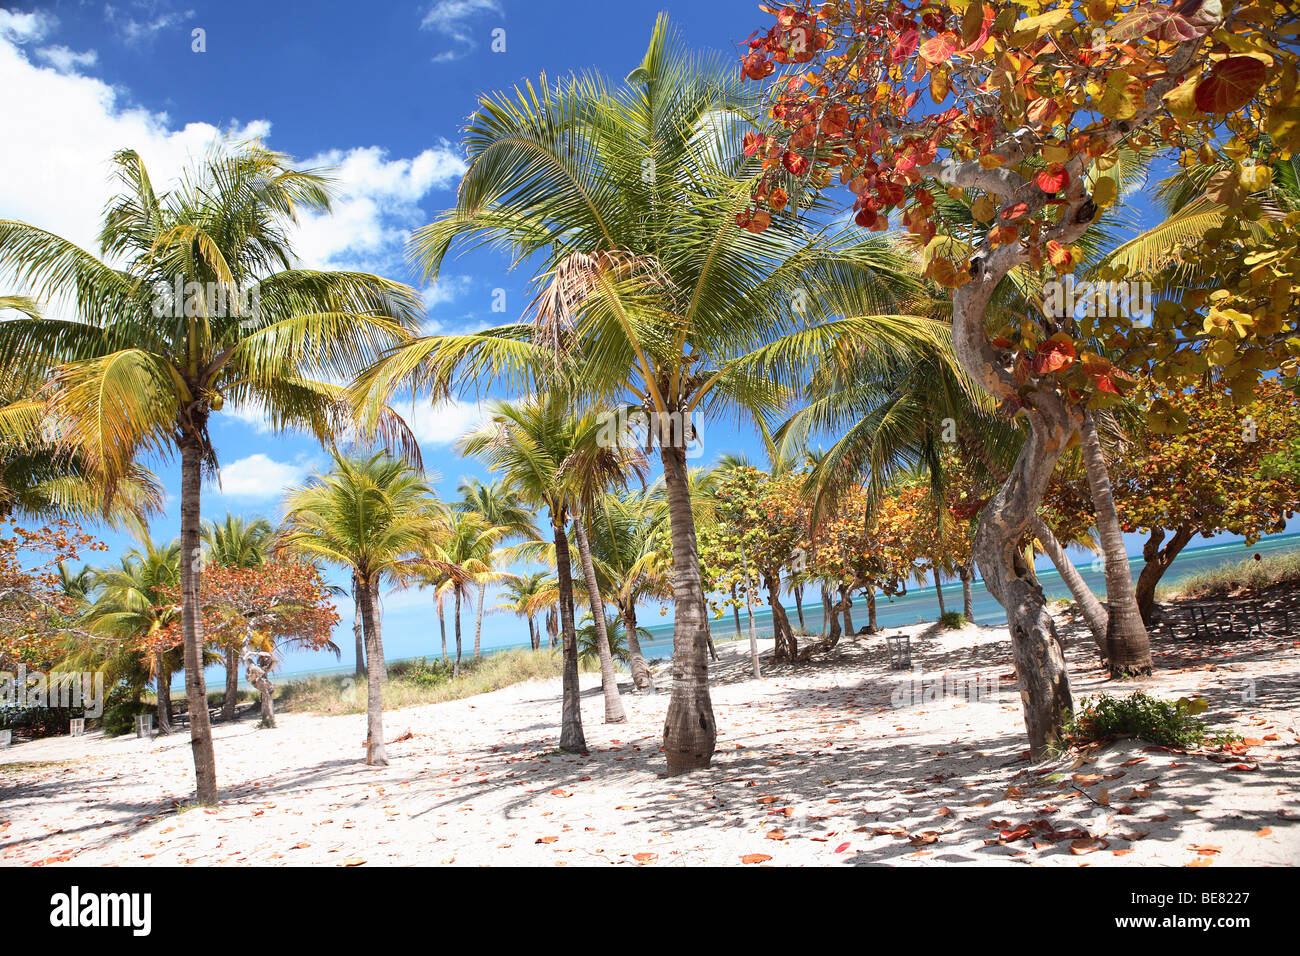 Palm trees at the beach under blue sky, Crandon Park, Key Biscayne, Miami, Florida, USA Stock Photo